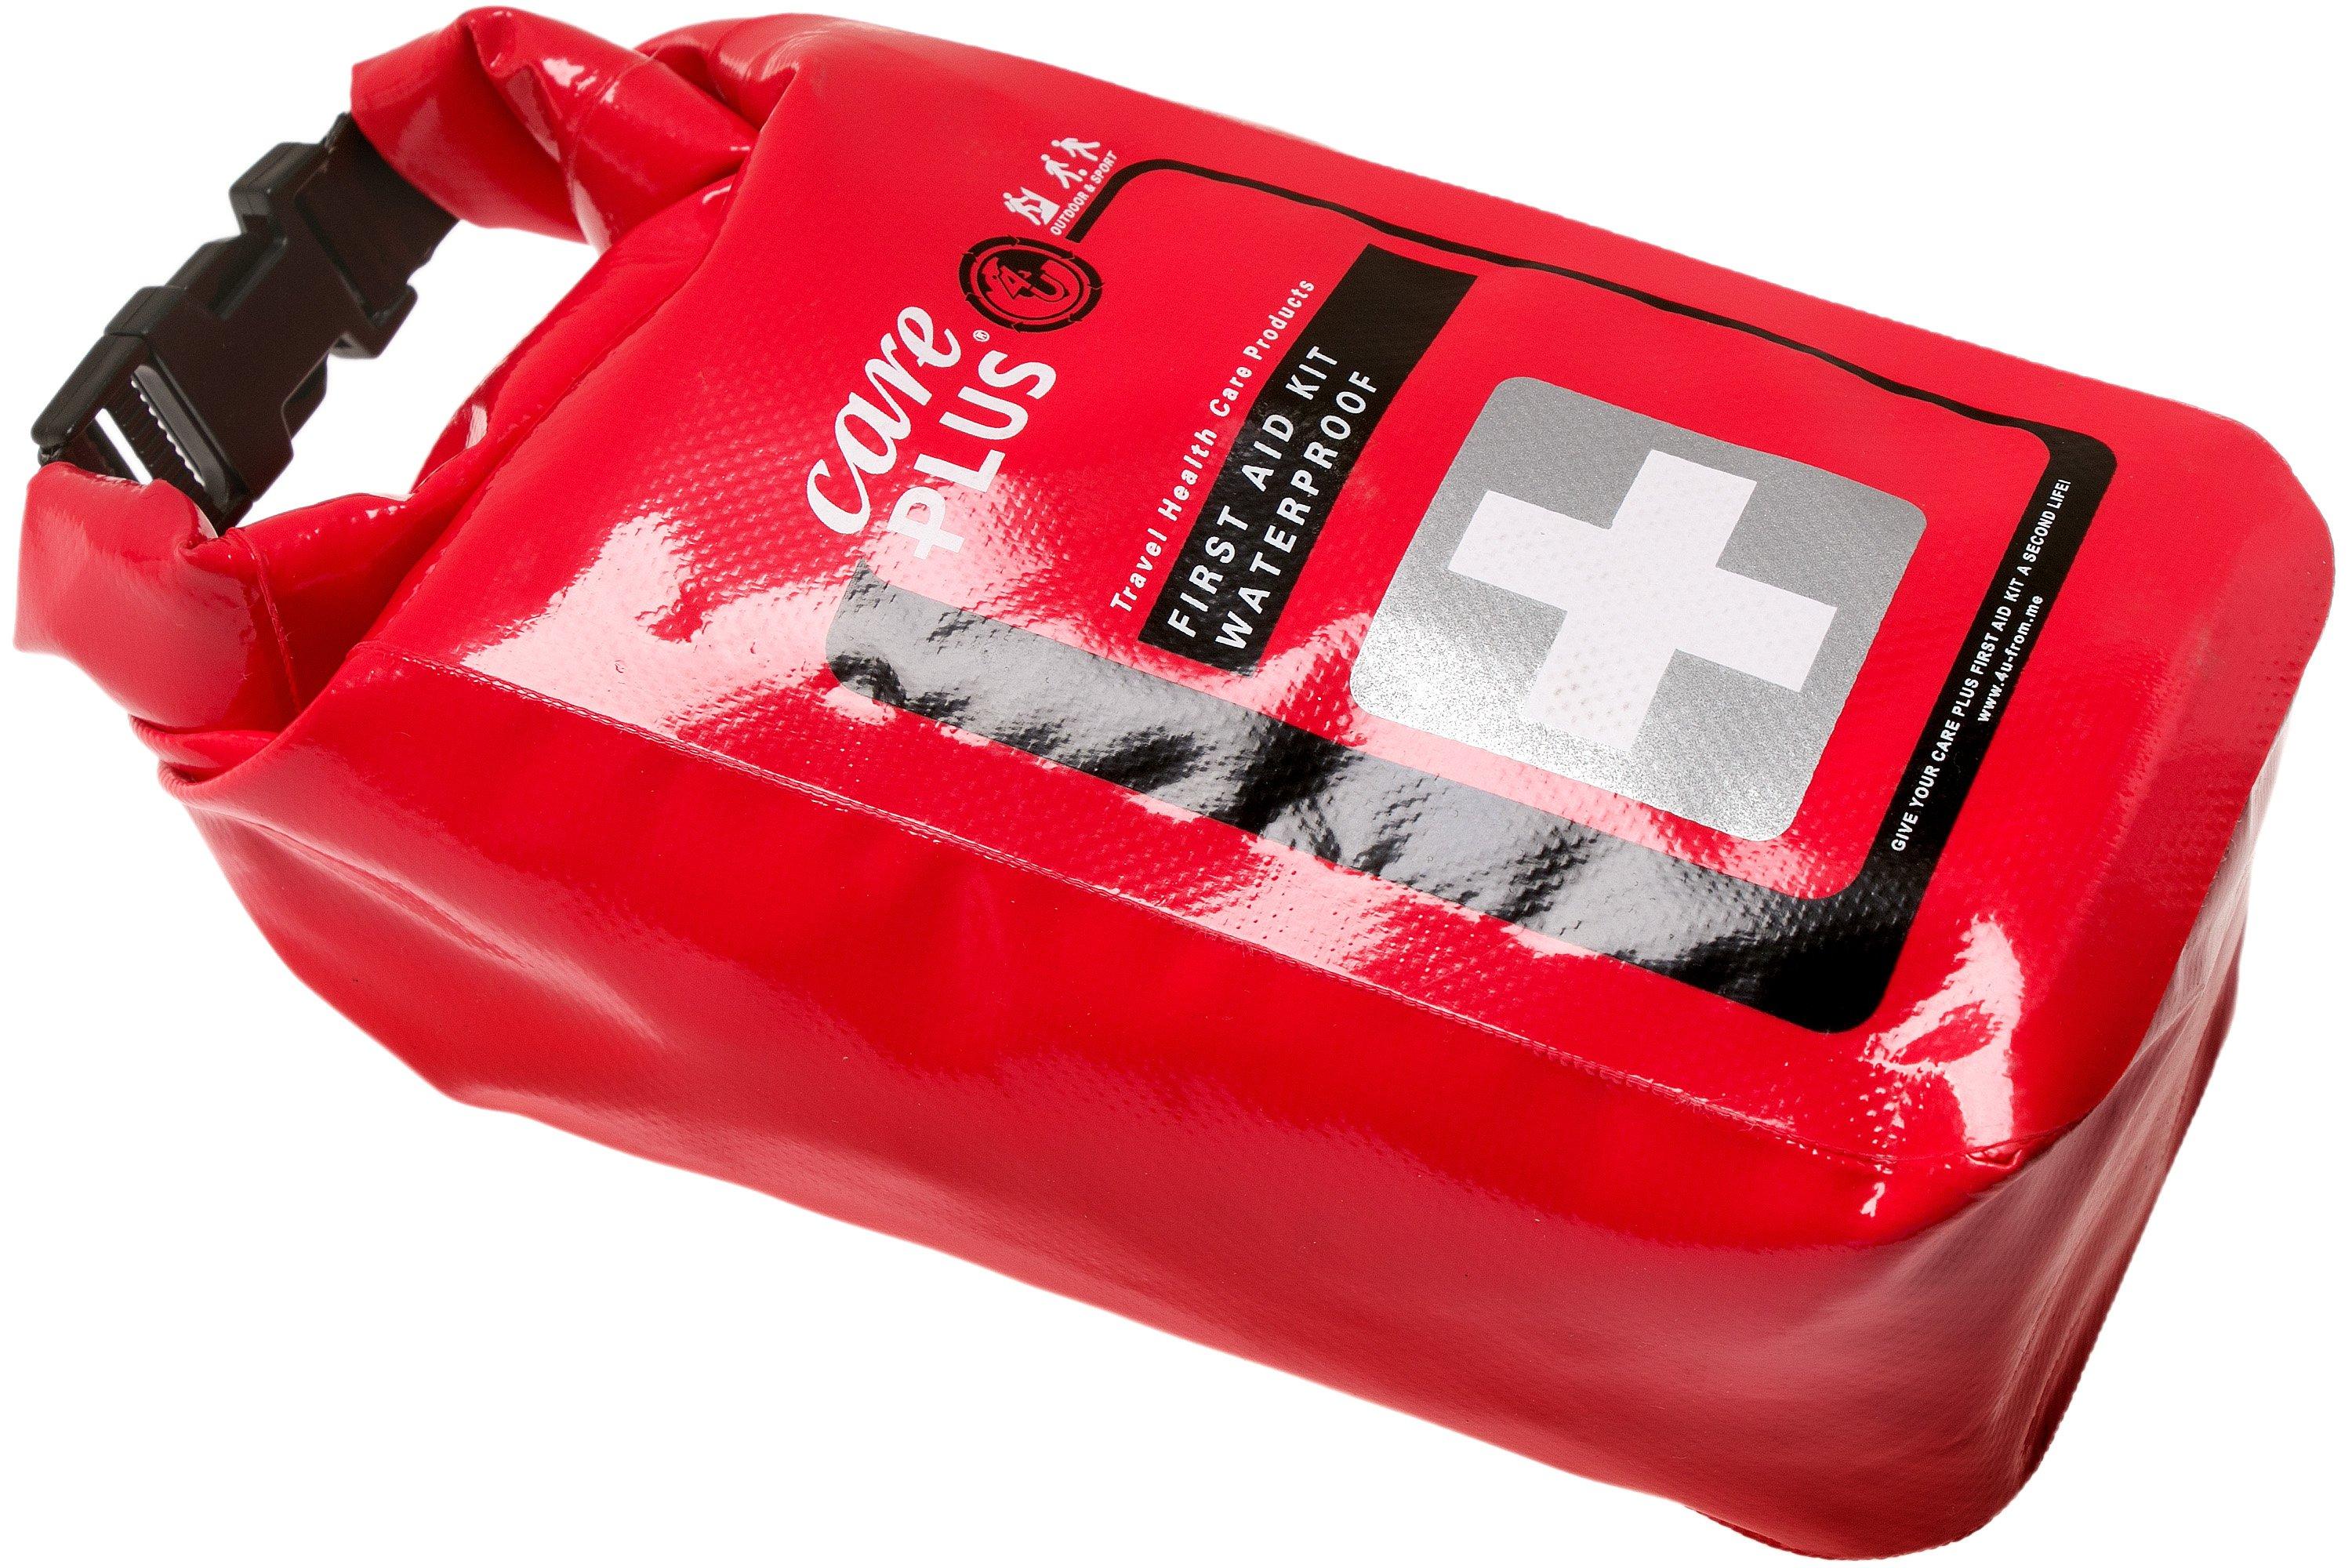 Care Plus First Aid Kit Waterproof, Erste-Hilfe-Set in wasserdichter Pouch